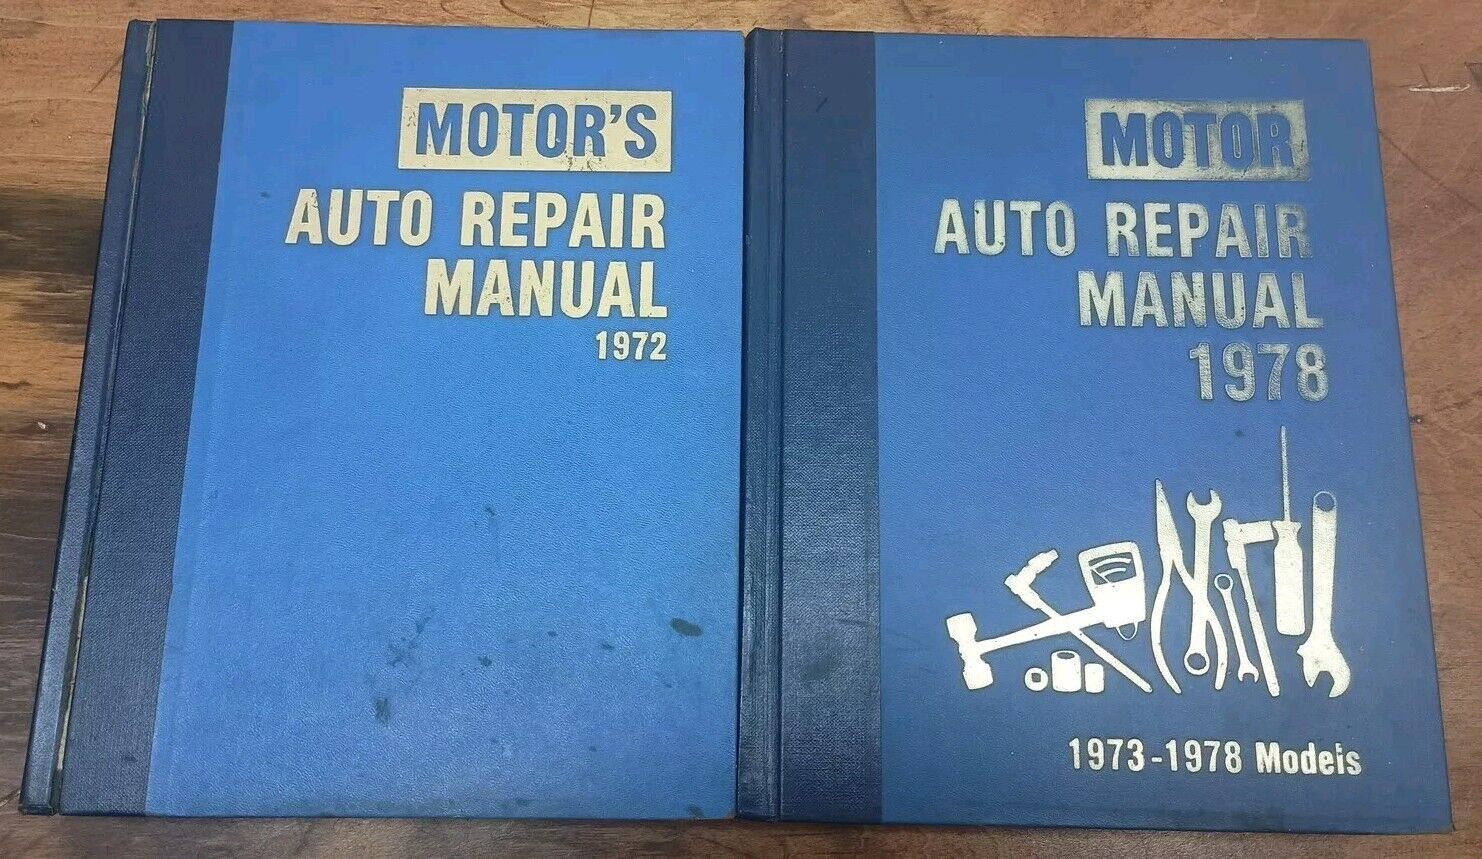 Vintage Motor's Auto Repair Manual 1972,1978 1st Printing Hardcover 